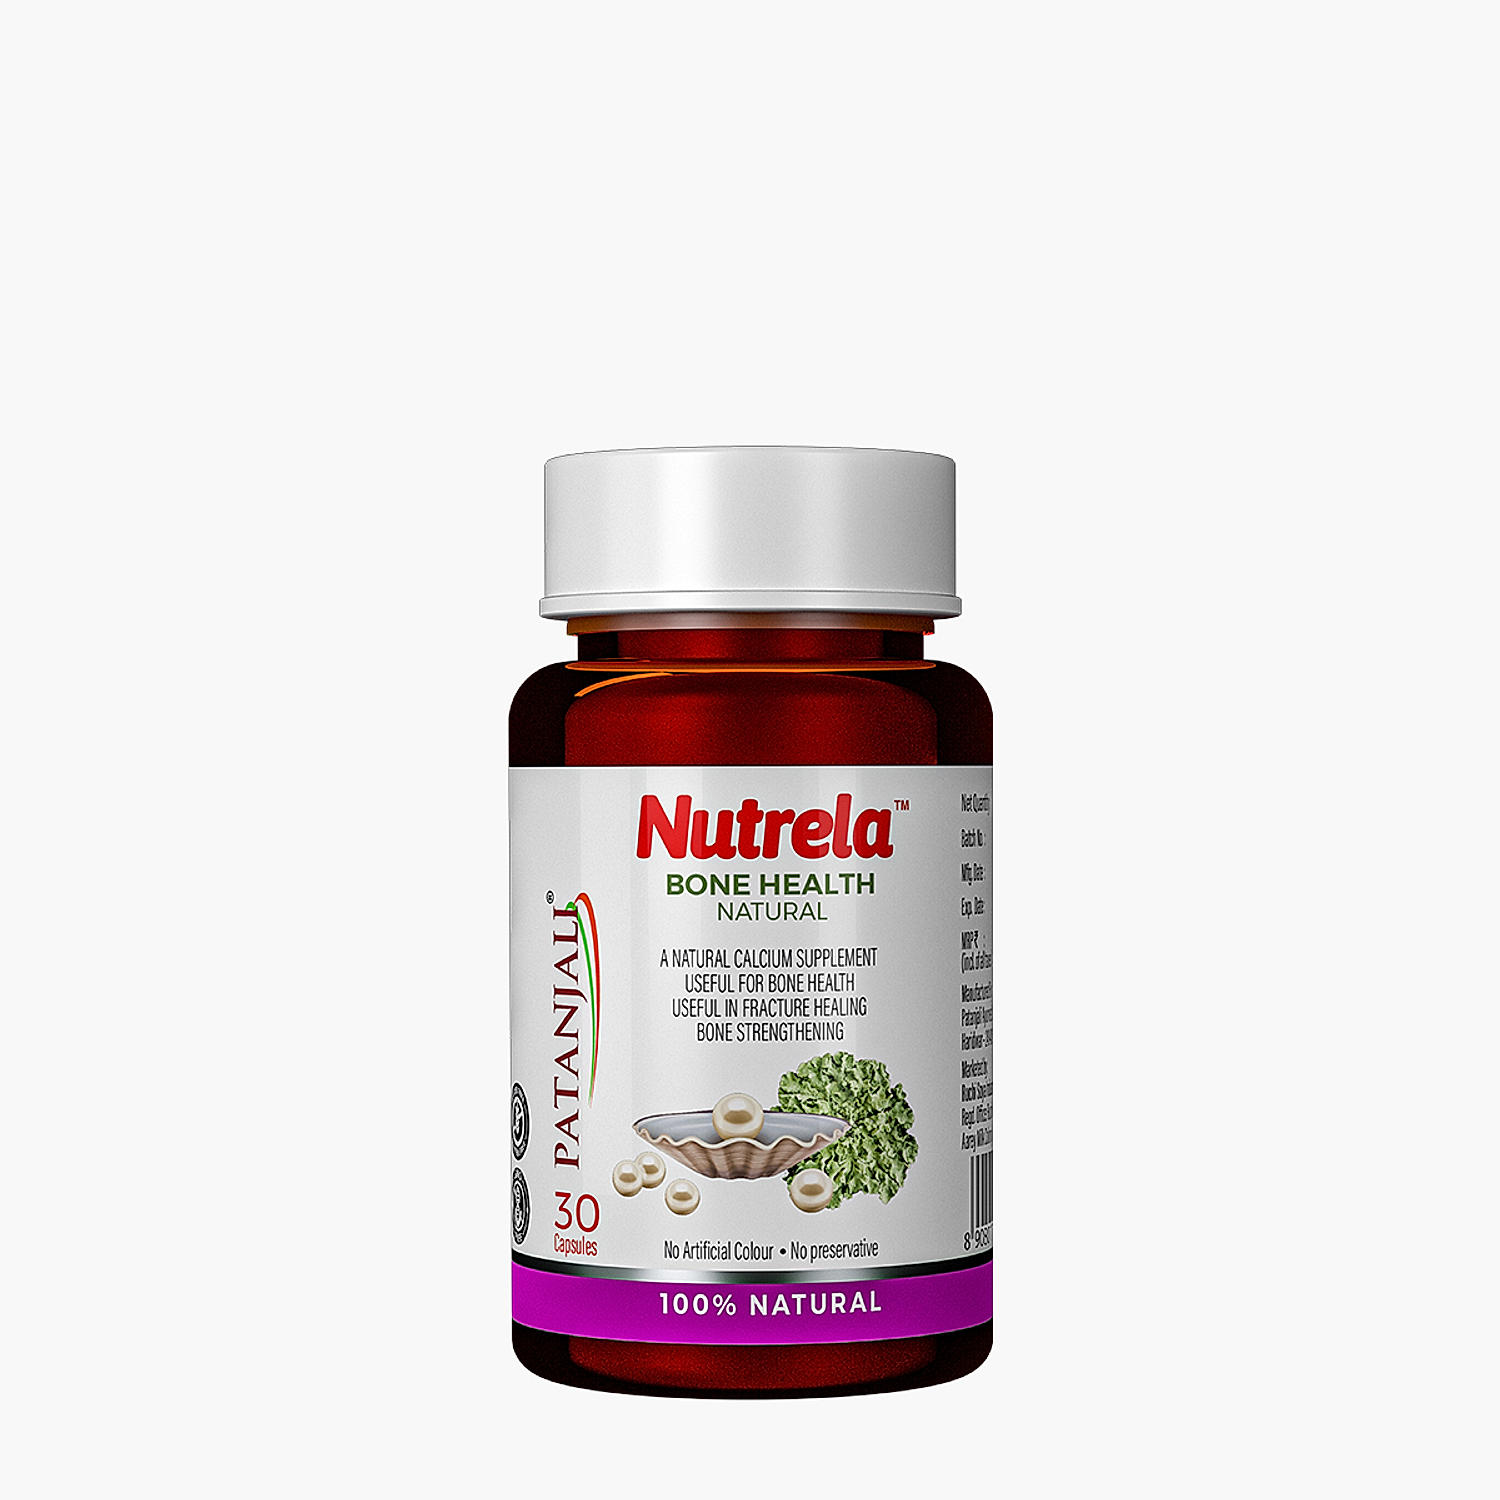 Patanjali Nutrela Bone Health - Natural Calcium Supplement (Pack of 1)